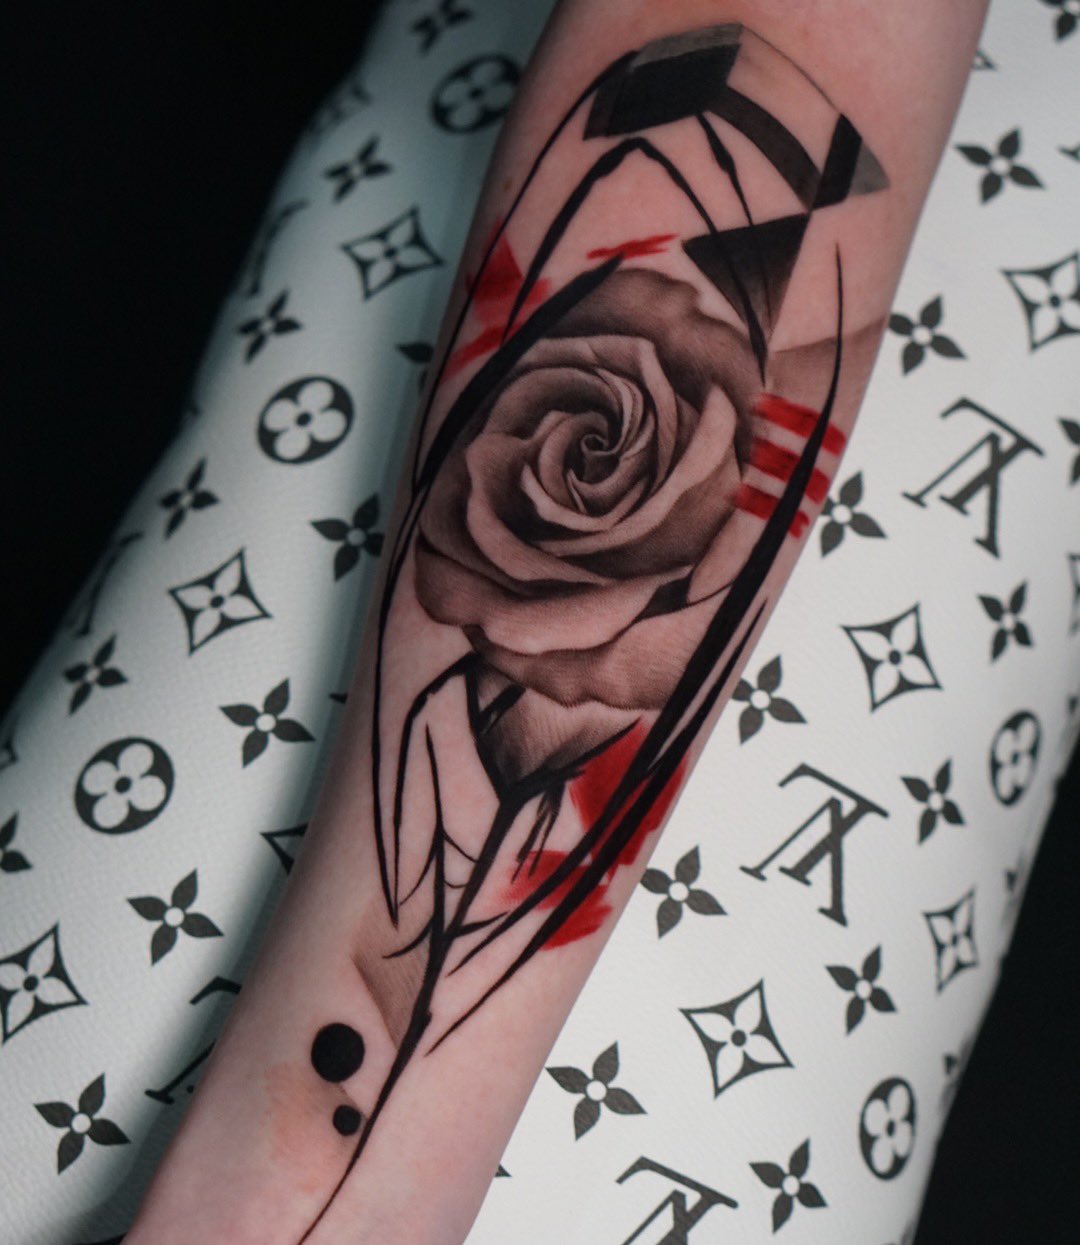 The Brook Tattoo on X: Another stunning #rose #tattoos by Jimbo.  #trashpolka artist in #Minnesota #Minneapolis  / X